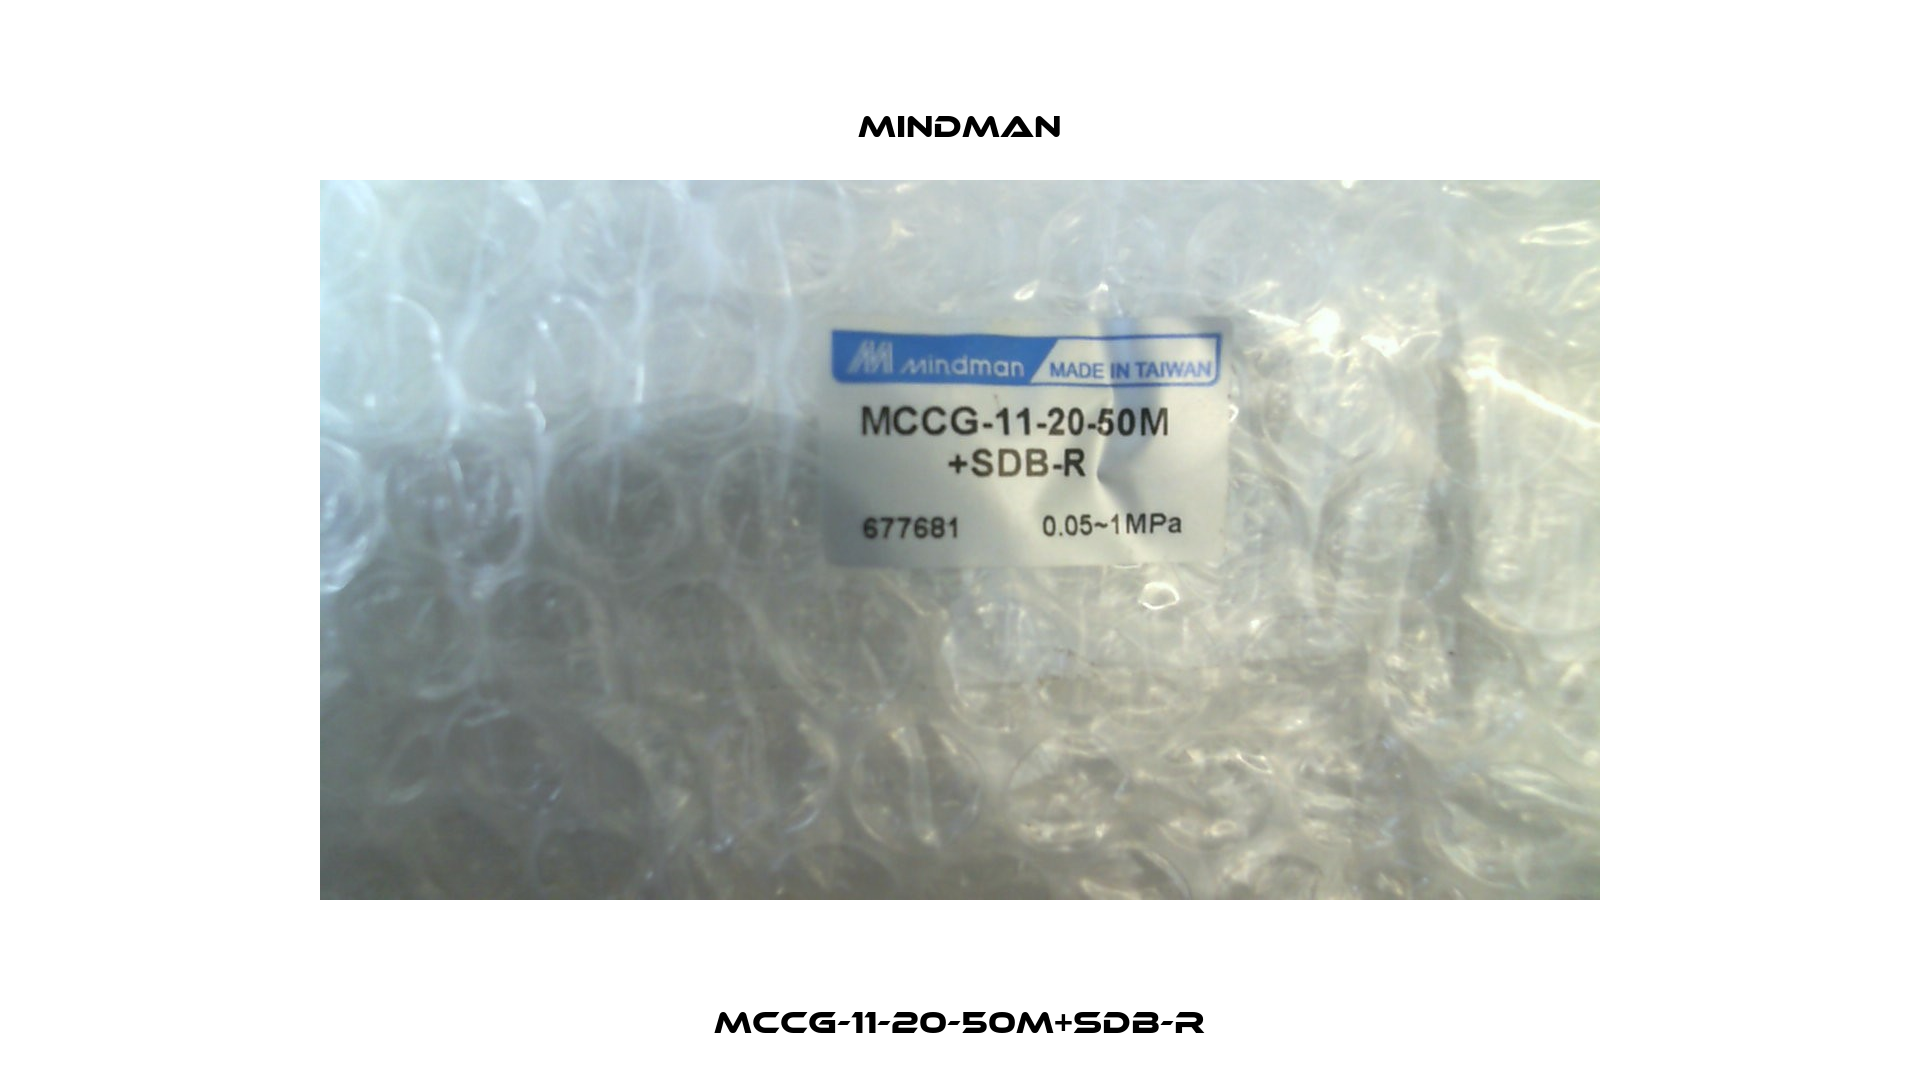 MCCG-11-20-50M+SDB-R Mindman